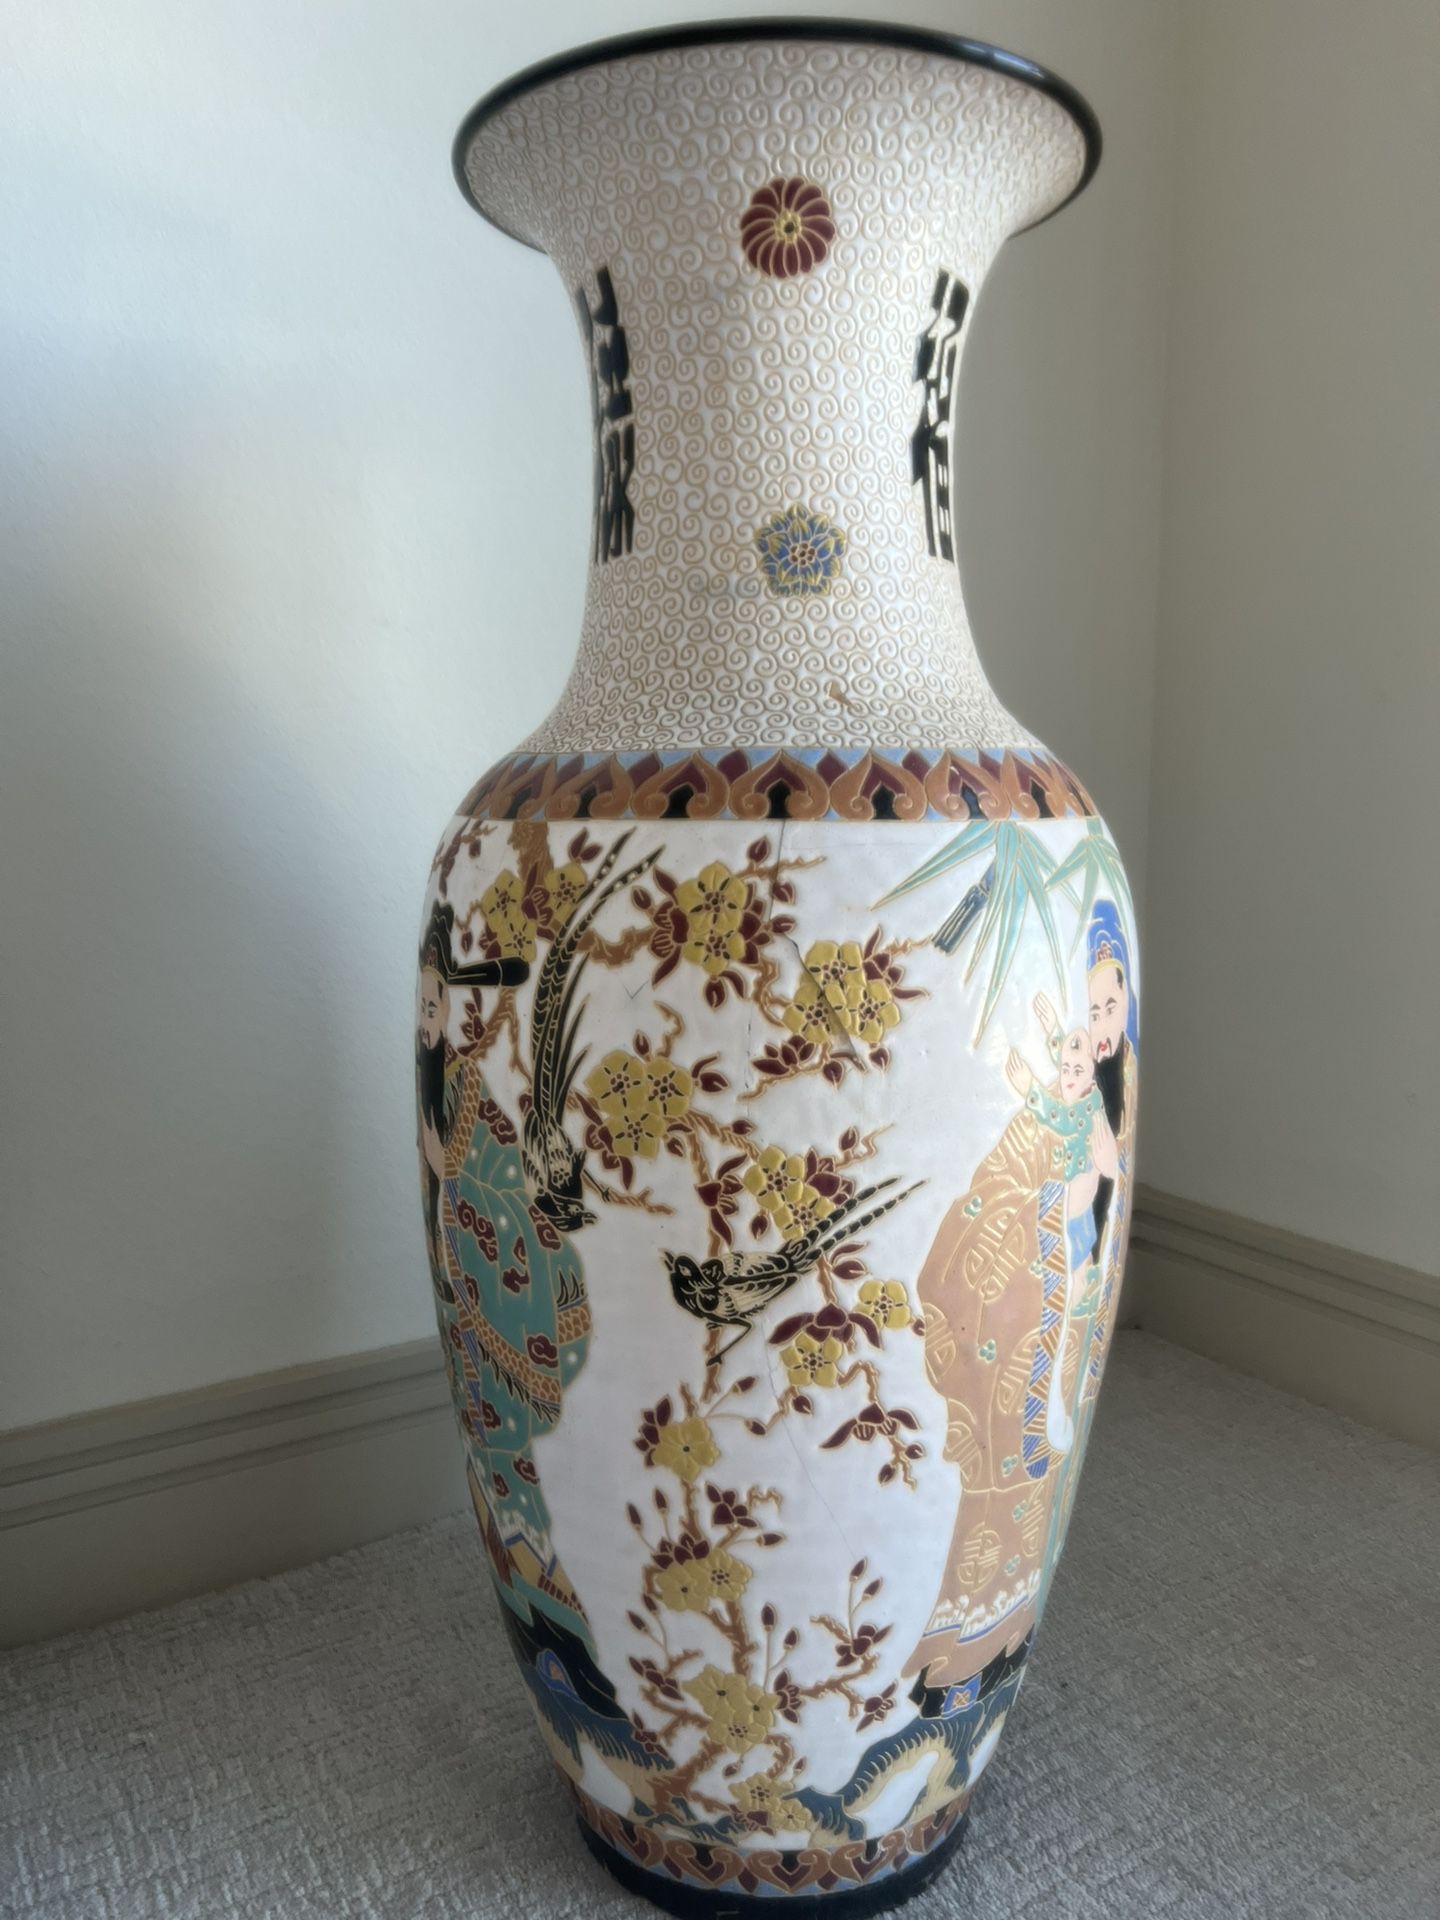 Satsuma Vase From Japan. Decorative Oriental Floor Vase. Height - 36”